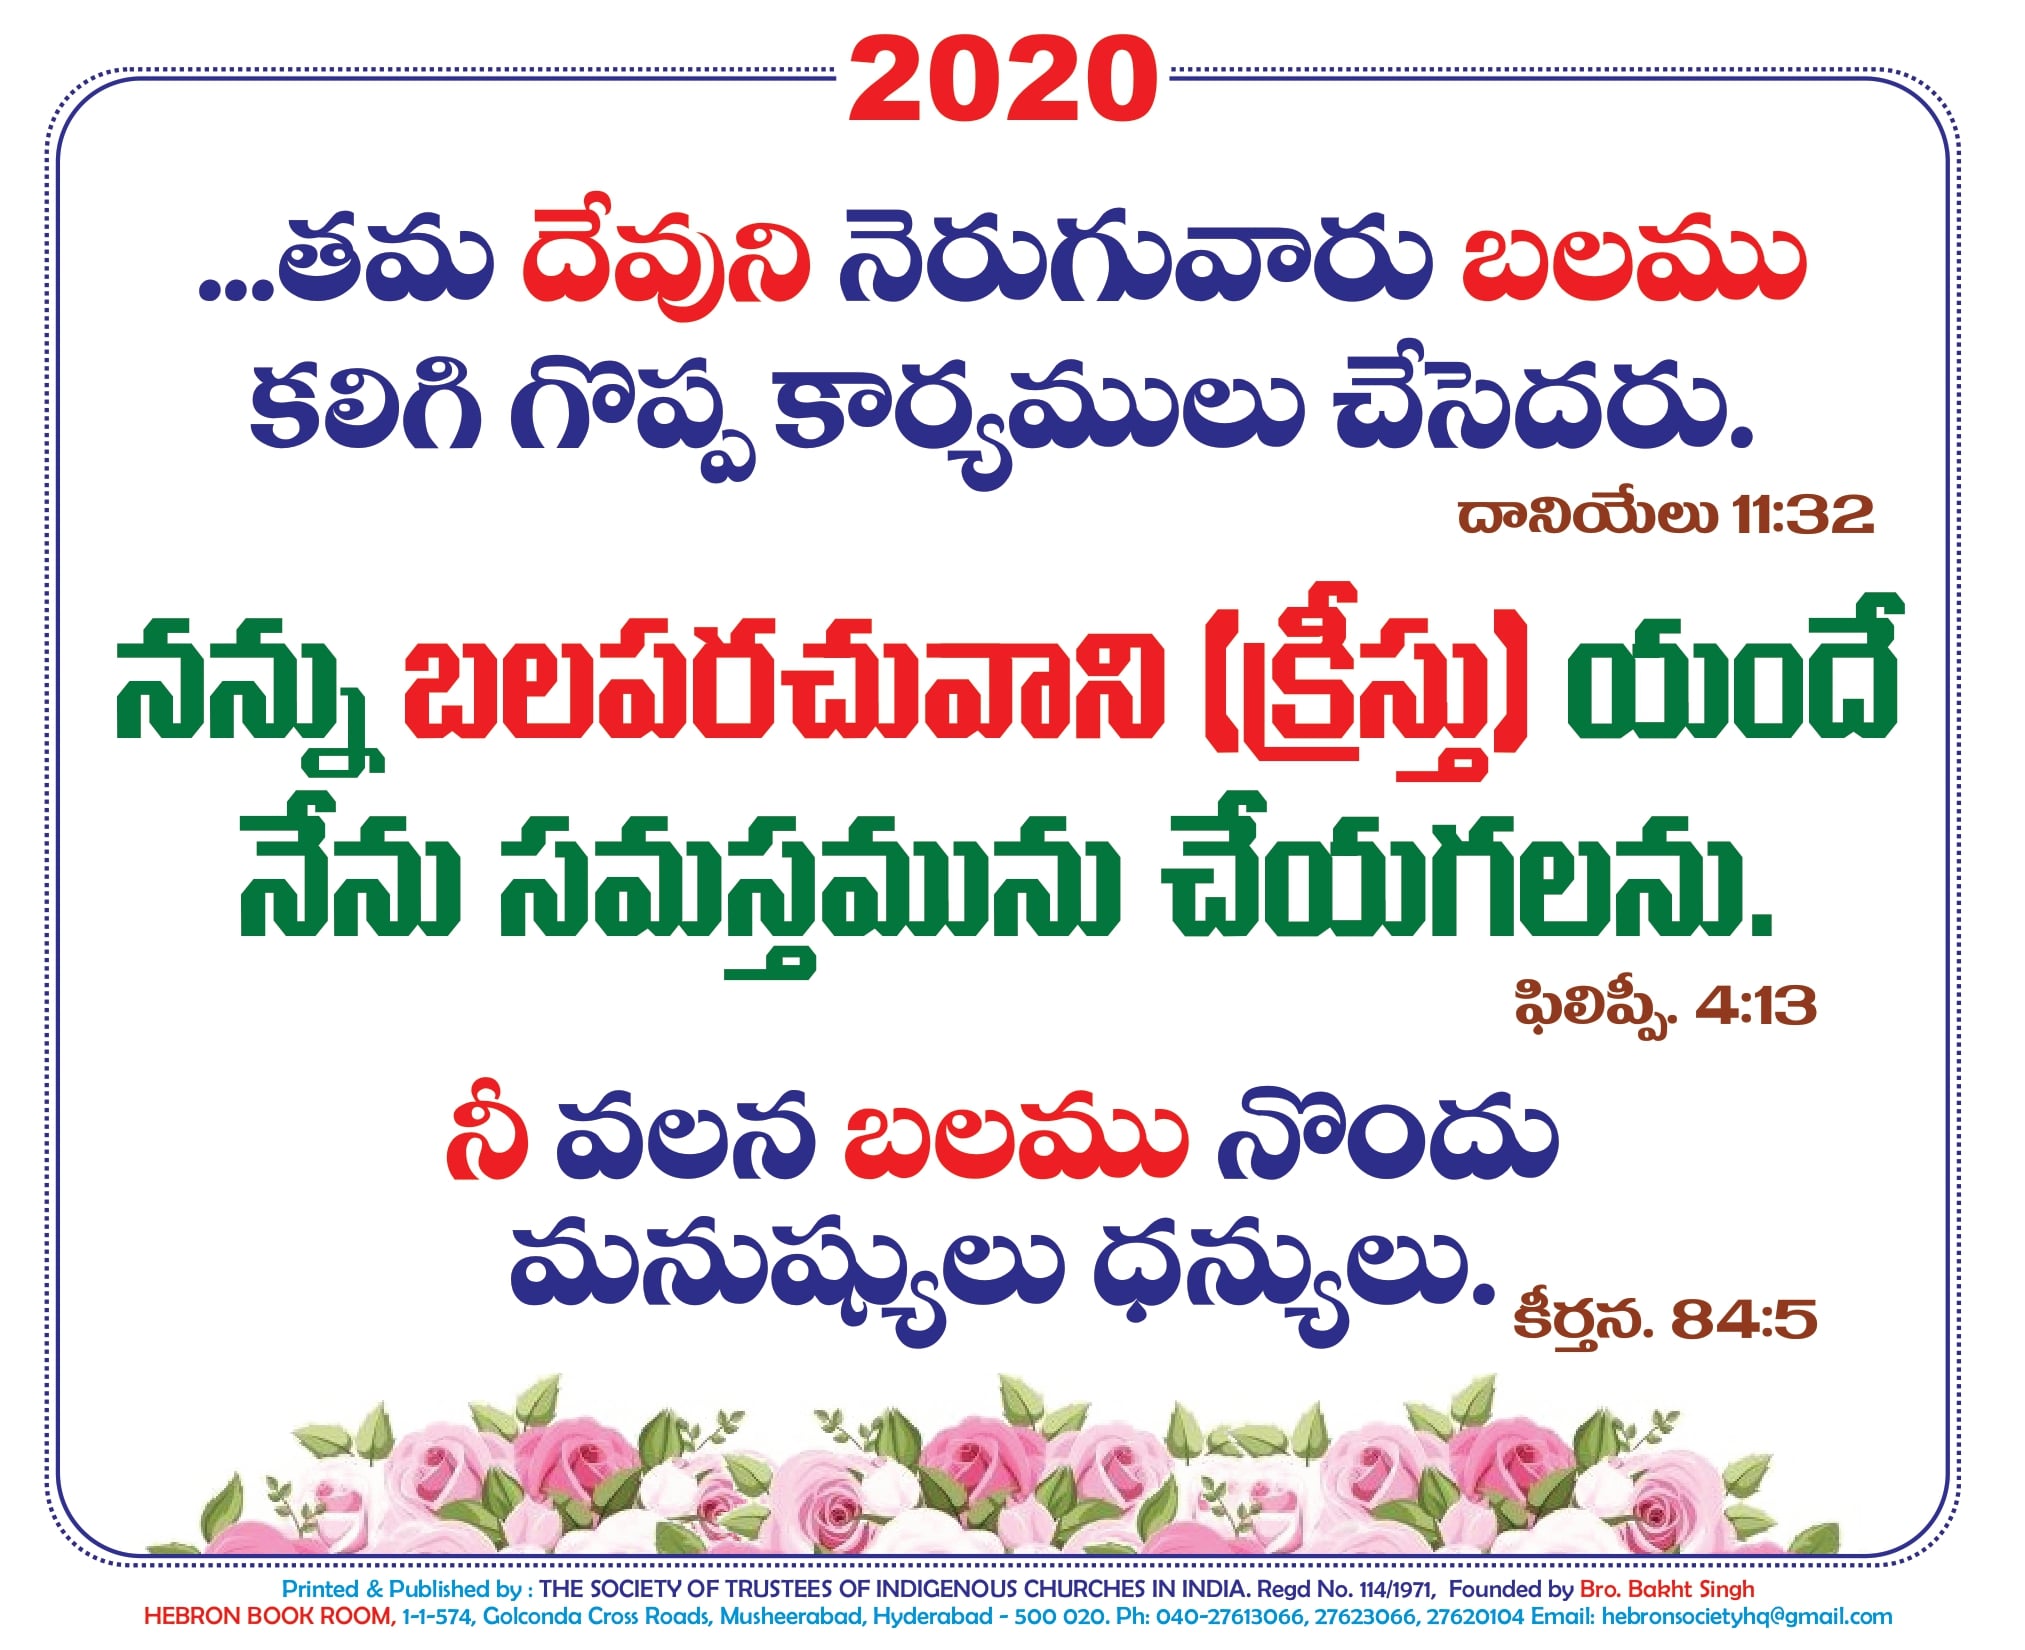 Hebron Motto card 2020 Telugu